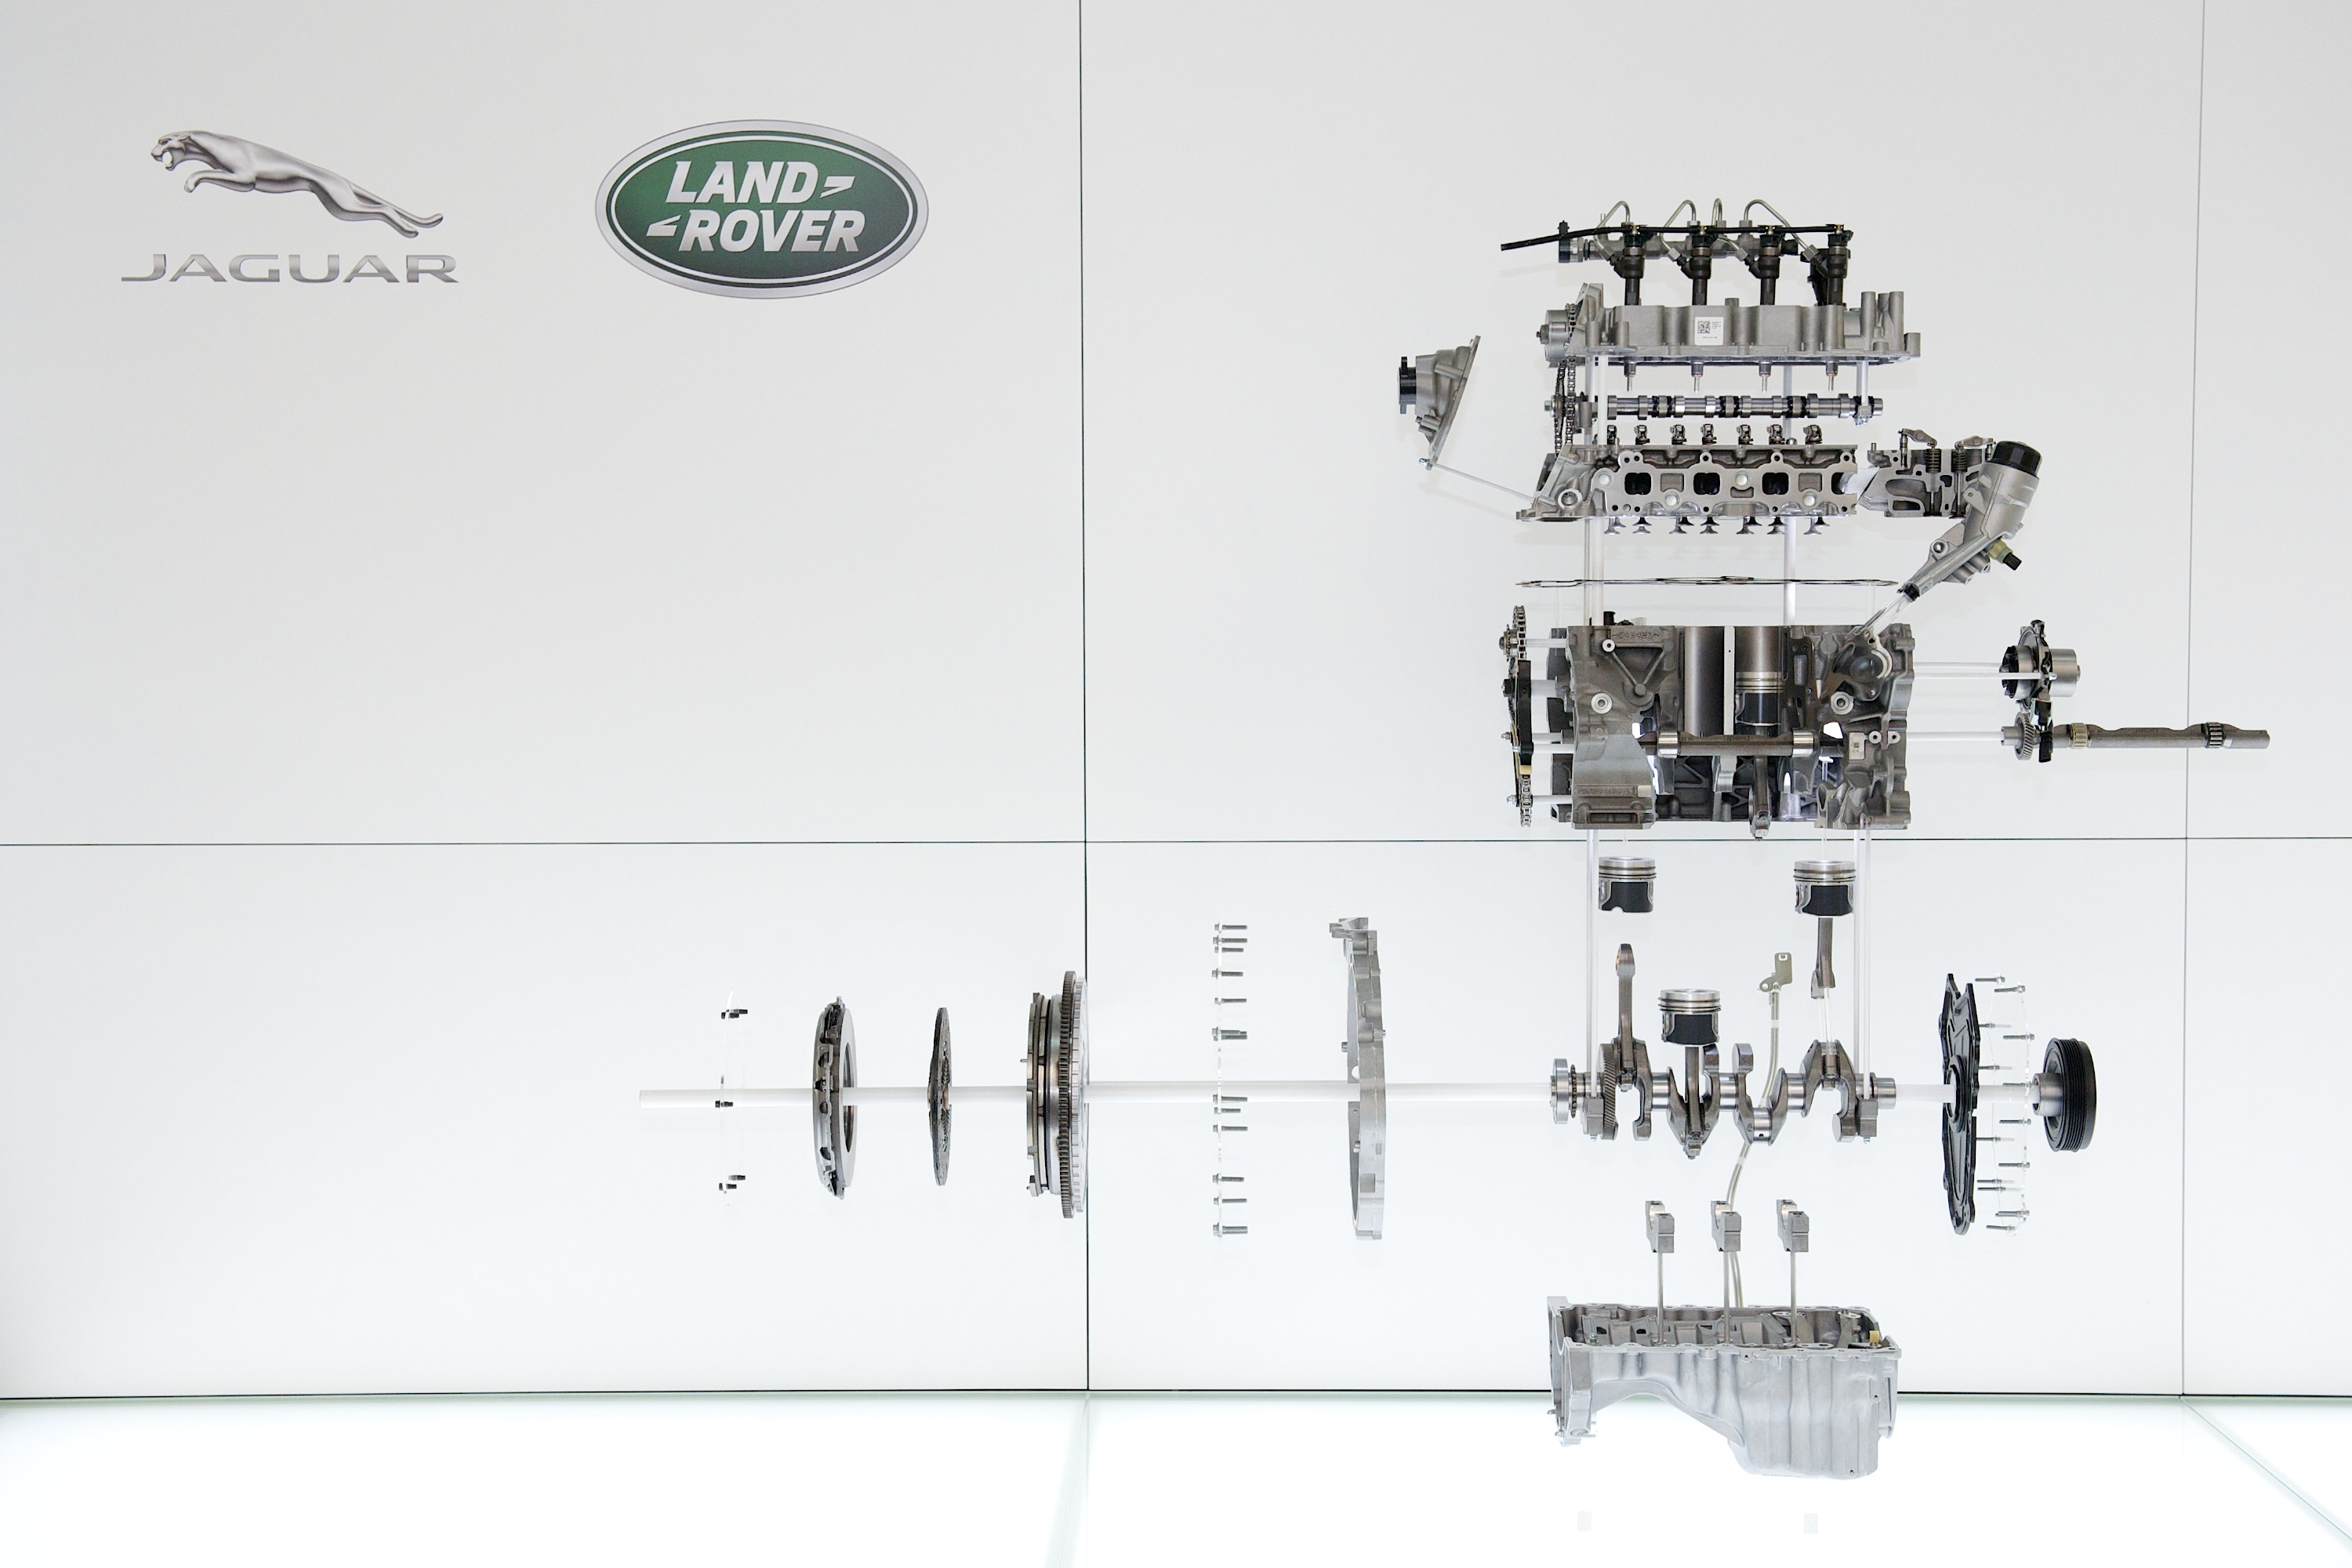 Jaguar Land Rover opens £500m UK engine facility